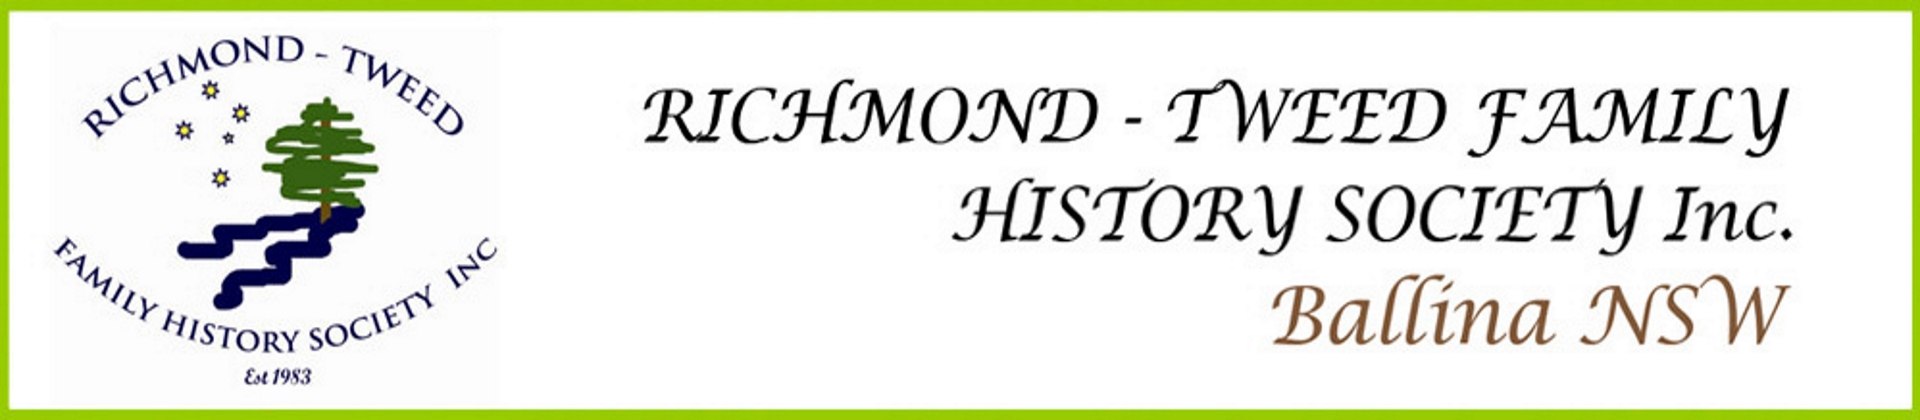 Richmond Tweed Family Historical Society